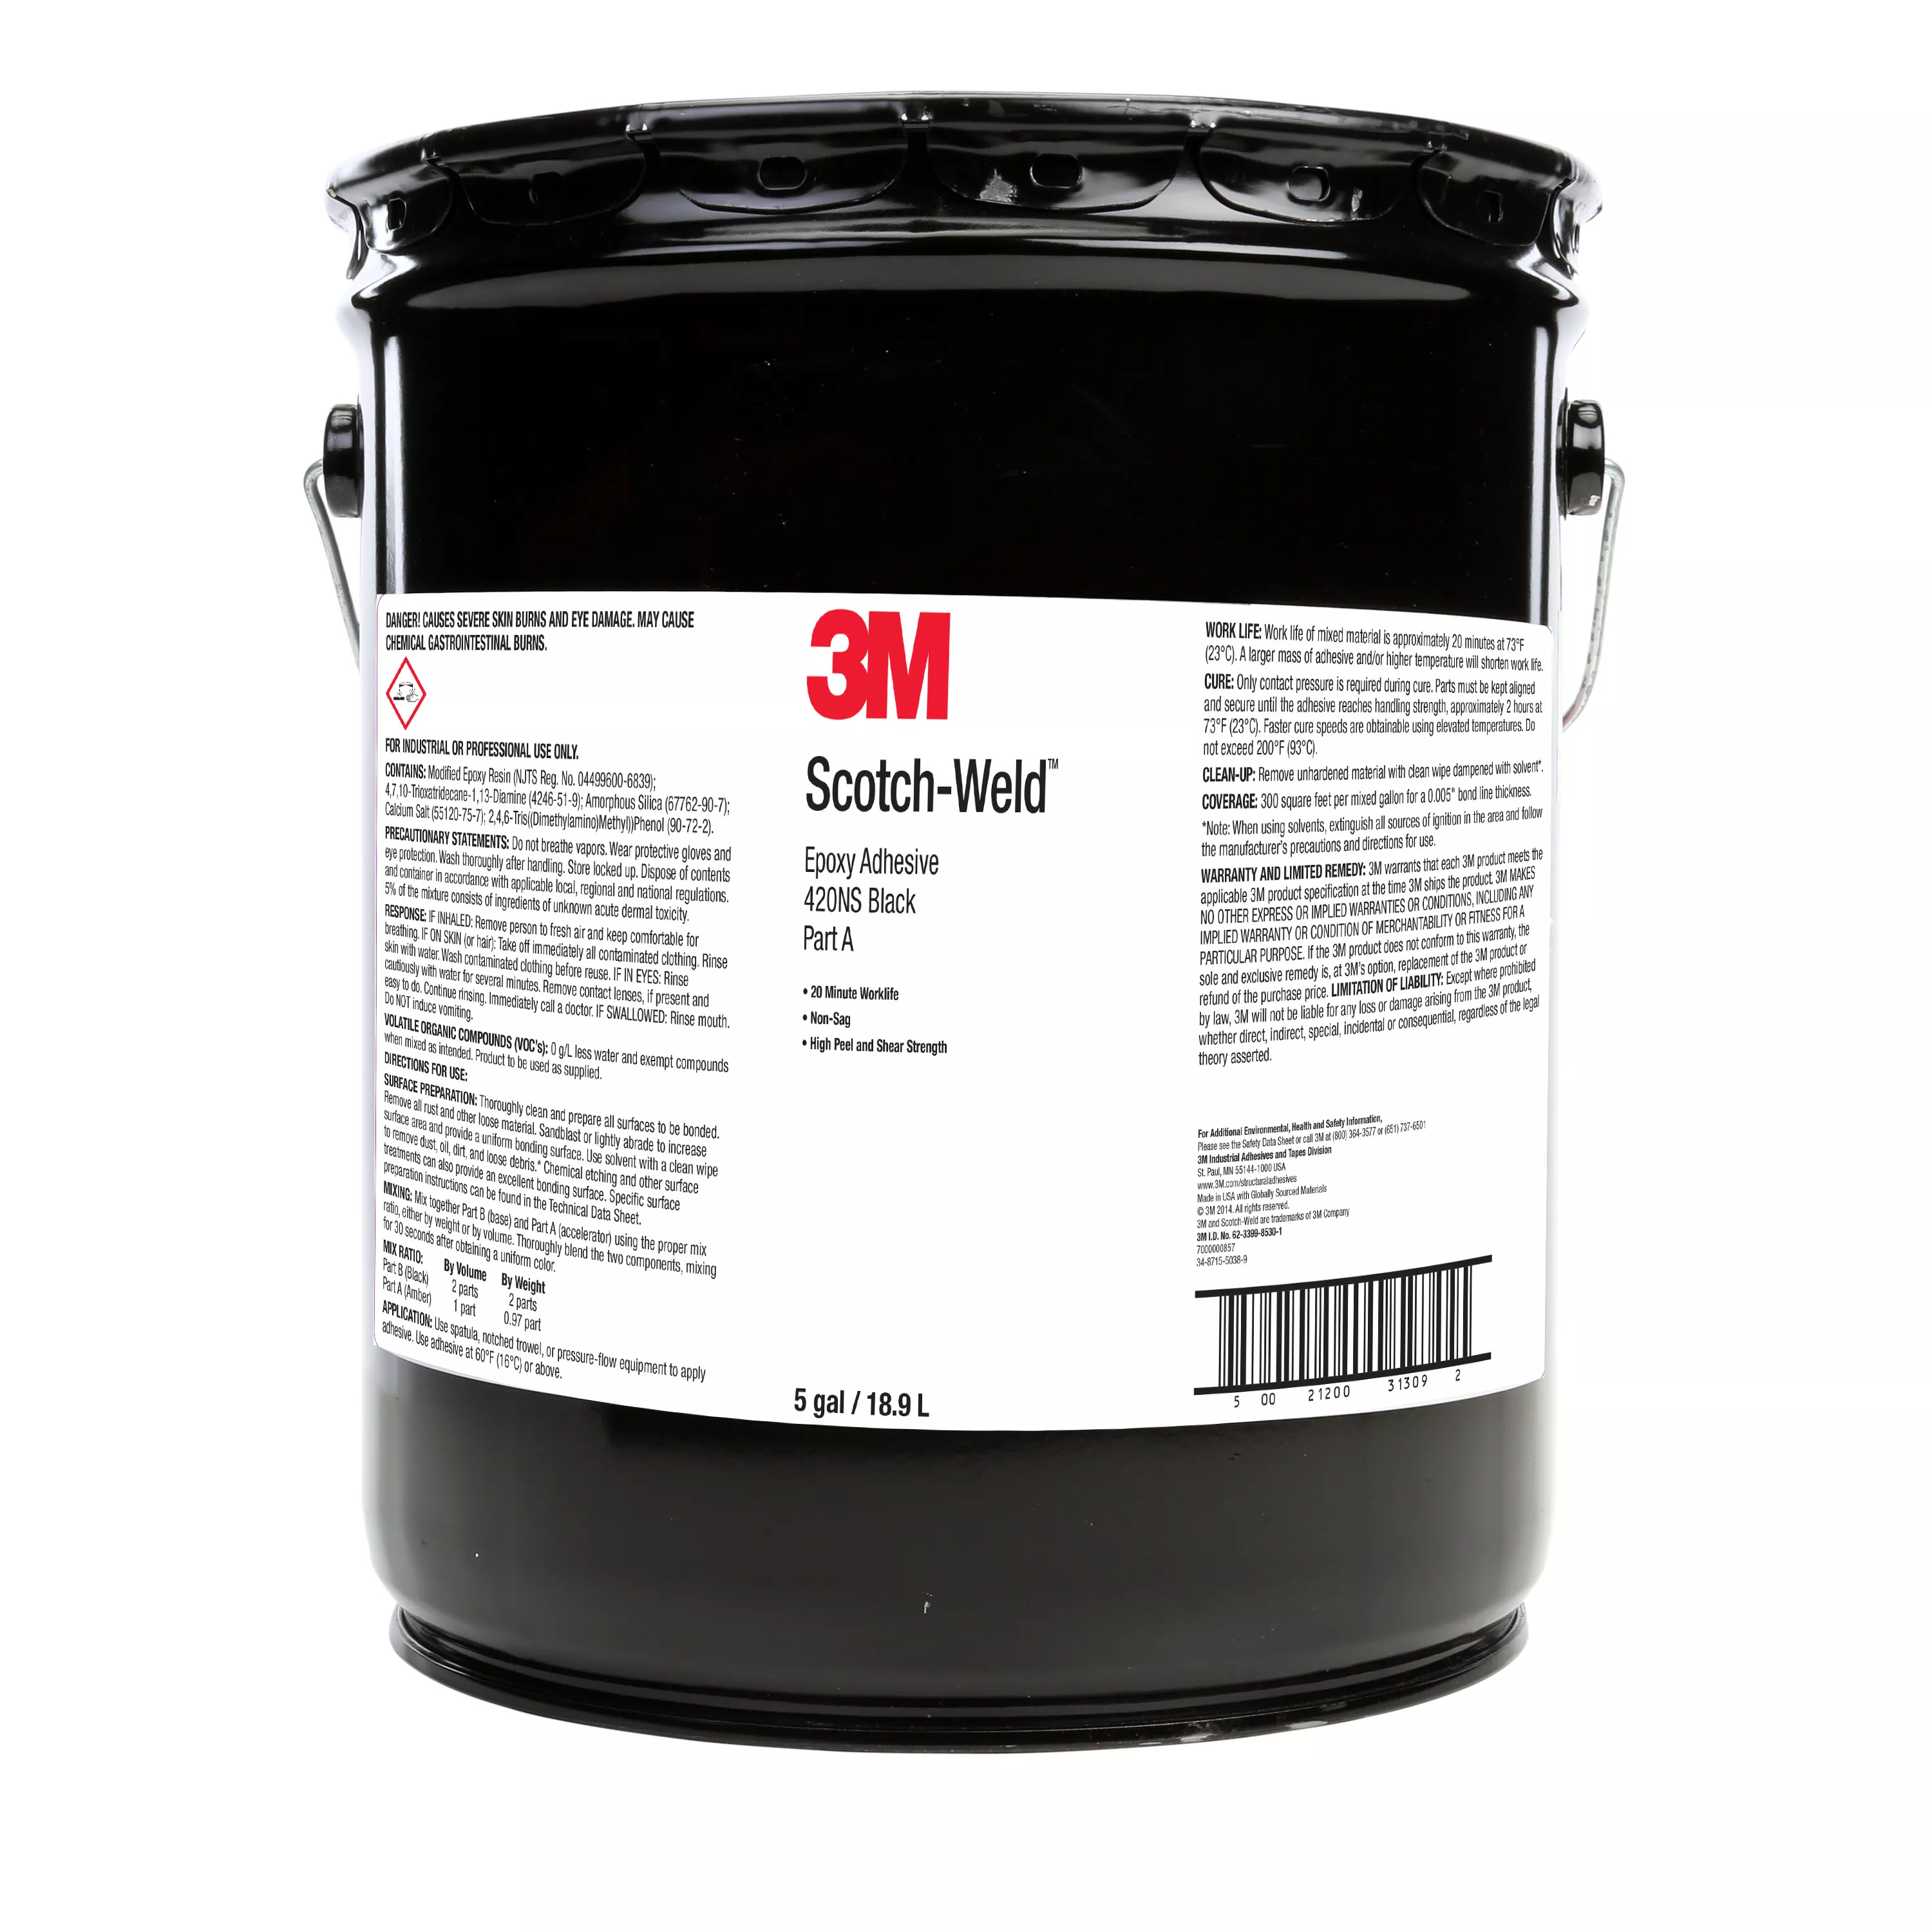 3M™ Scotch-Weld™ Epoxy Adhesive 420NS, Black, Part A, 5 Gallon (Pail), 1
Can/Drum